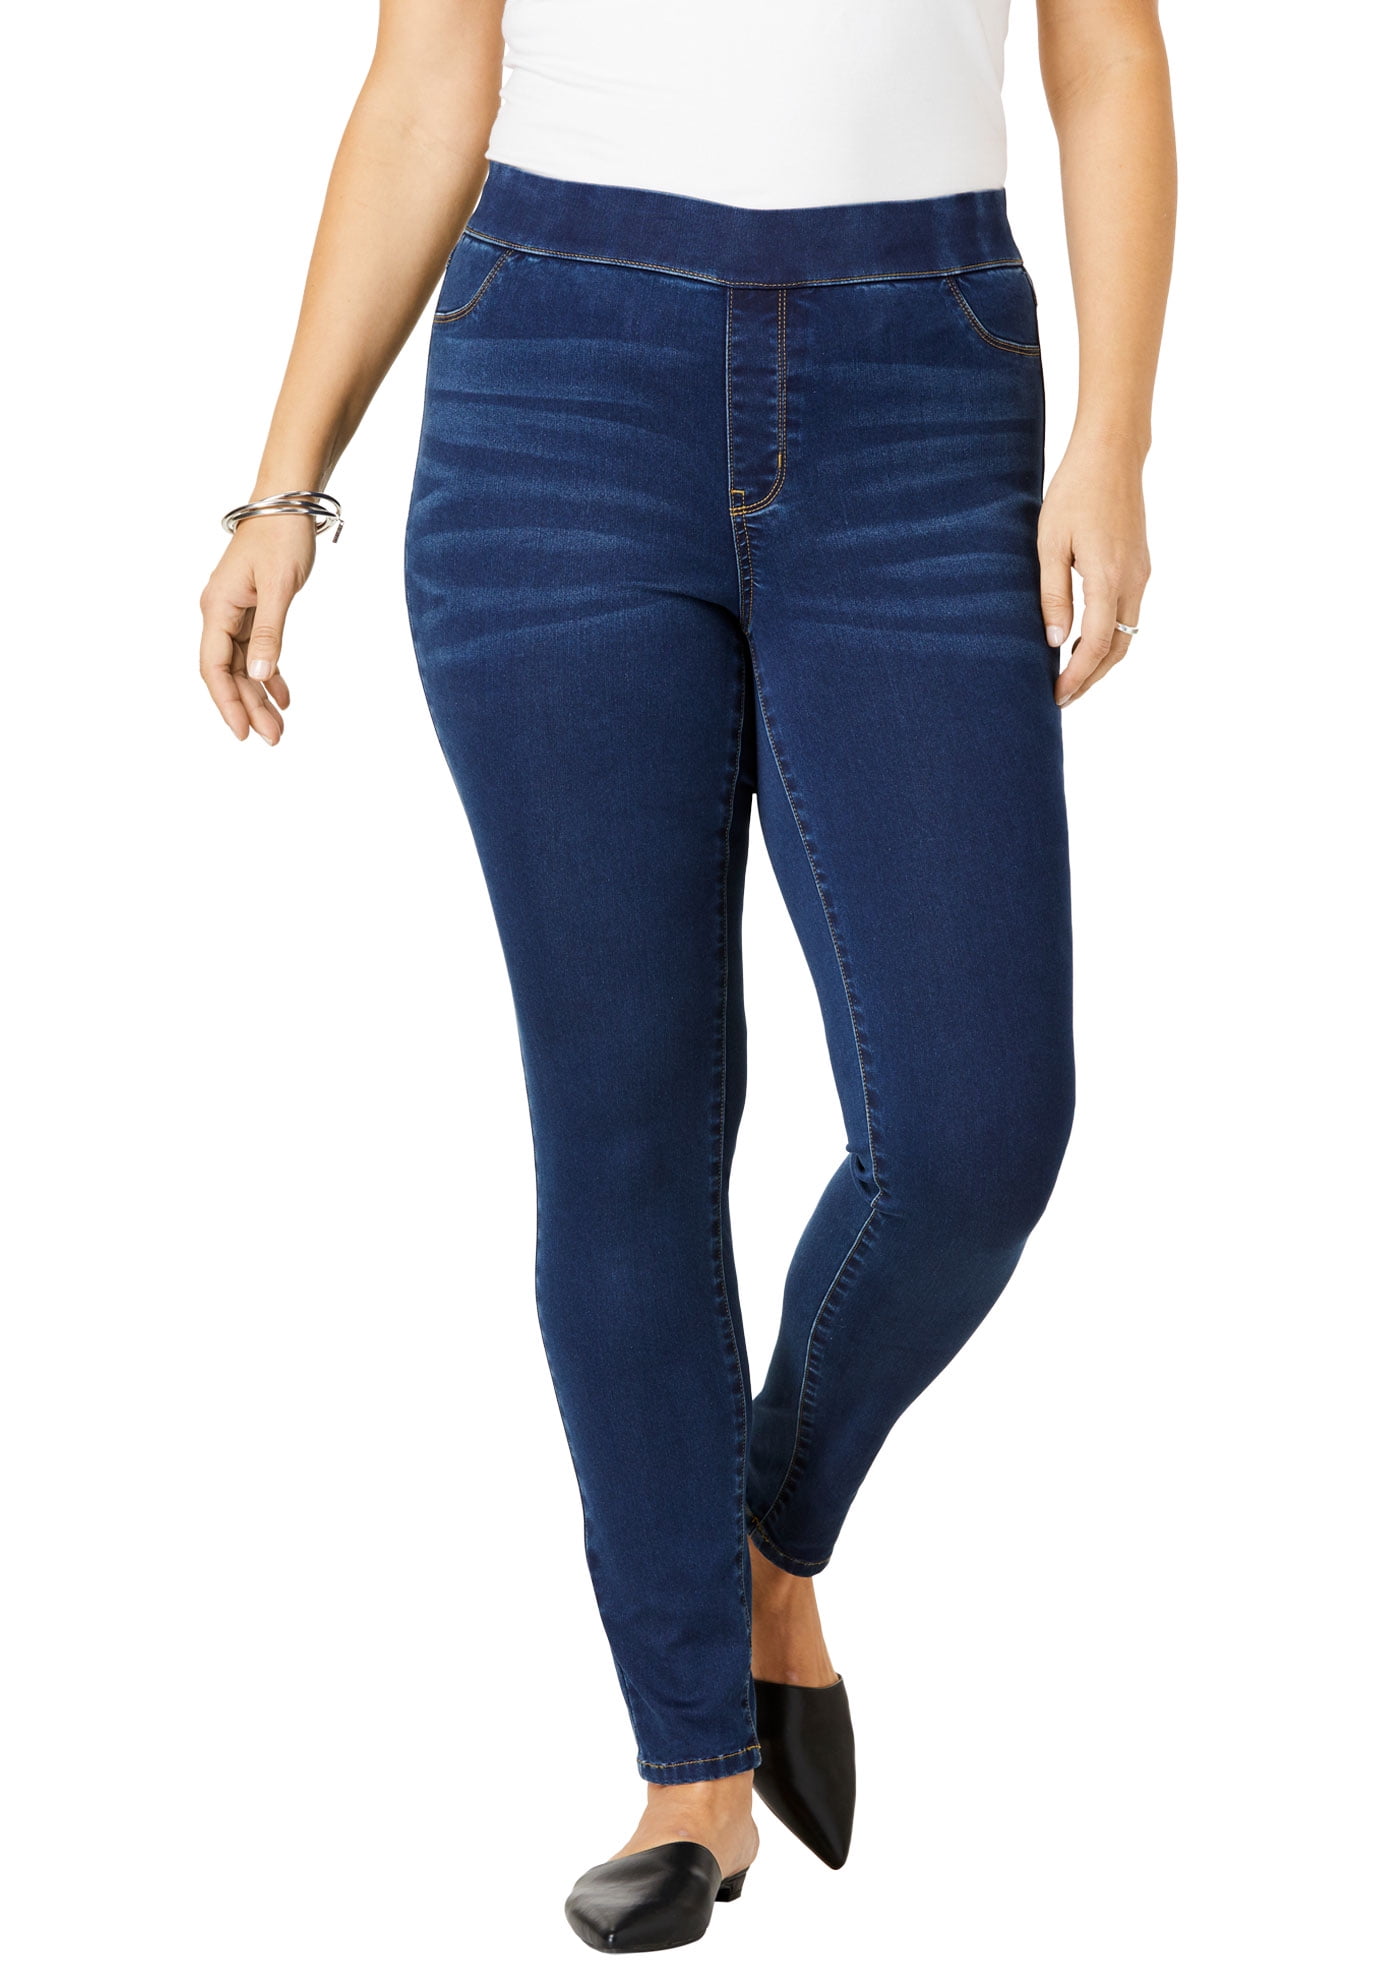 Roaman's - Roamans Women's Plus Size The No-Gap Jegging Pull On Jeans ...